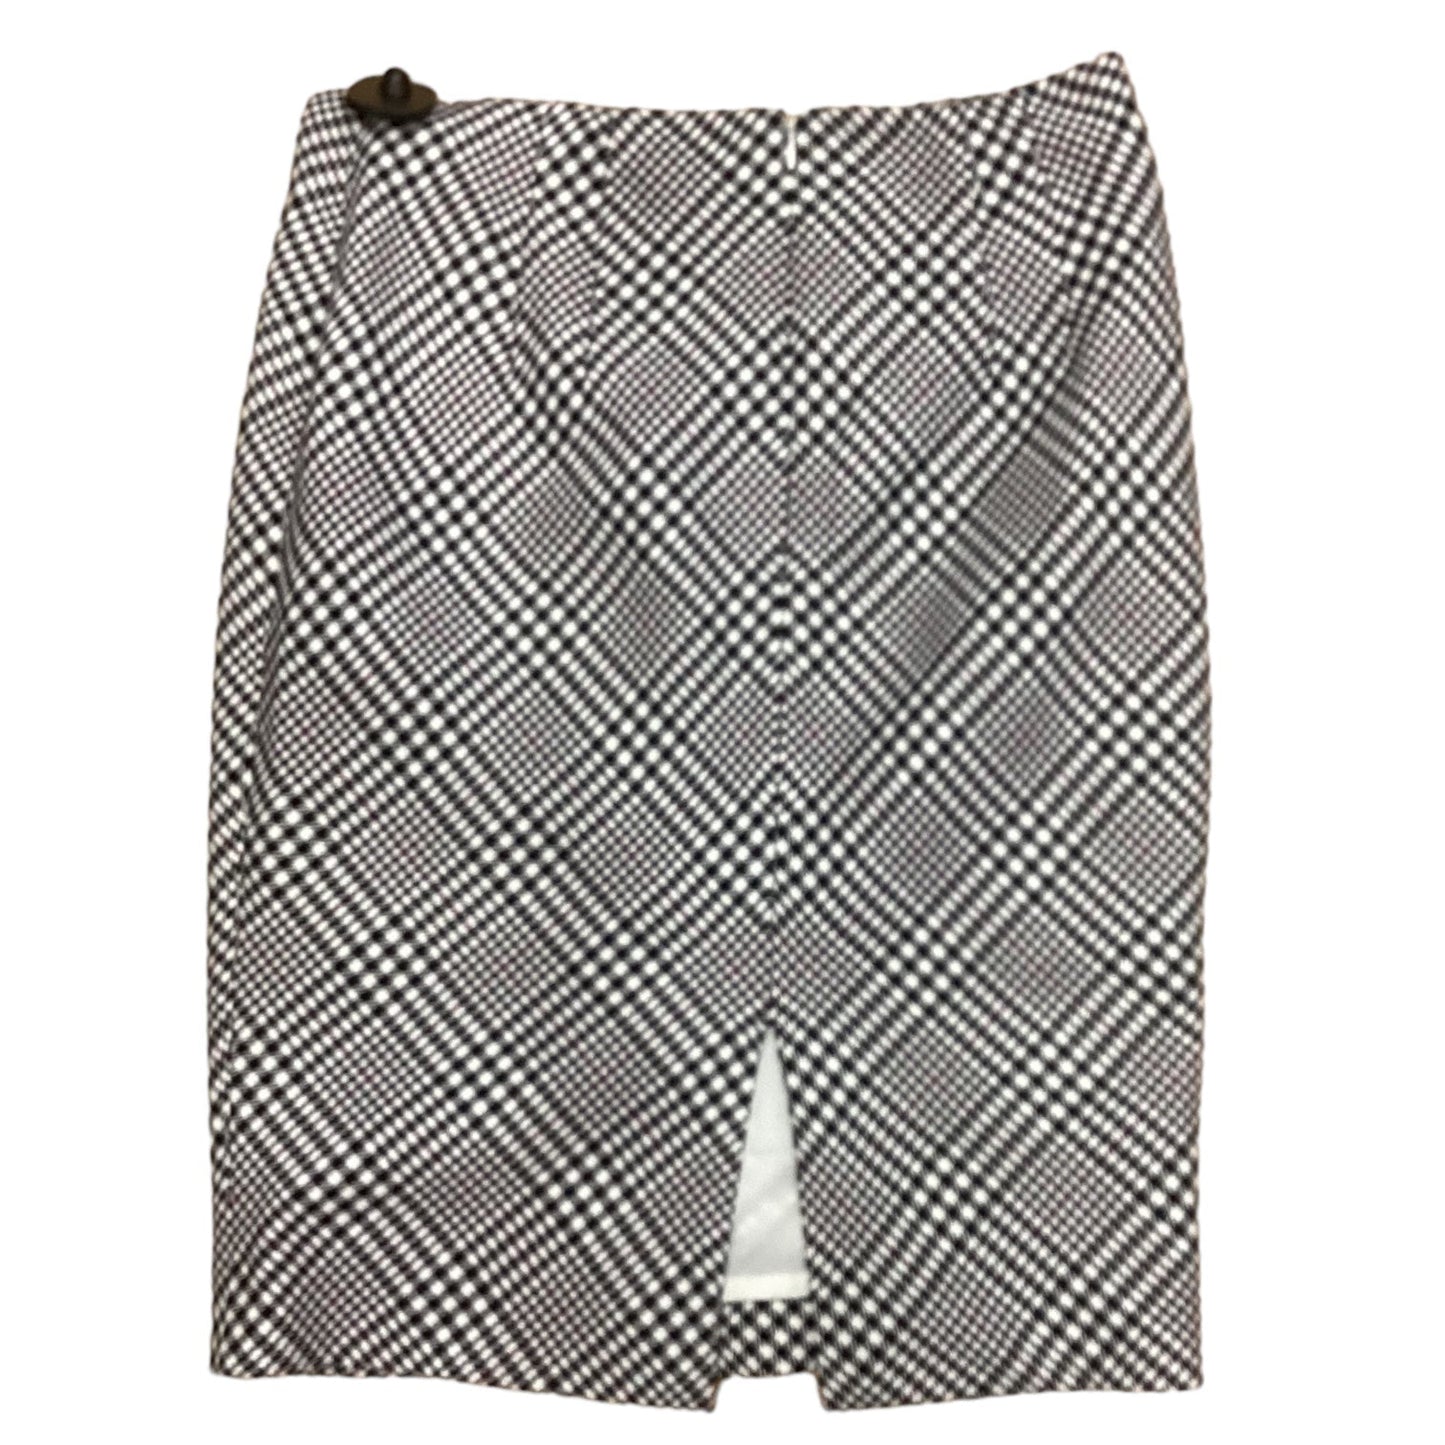 Skirt Midi By White House Black Market  Size: 10